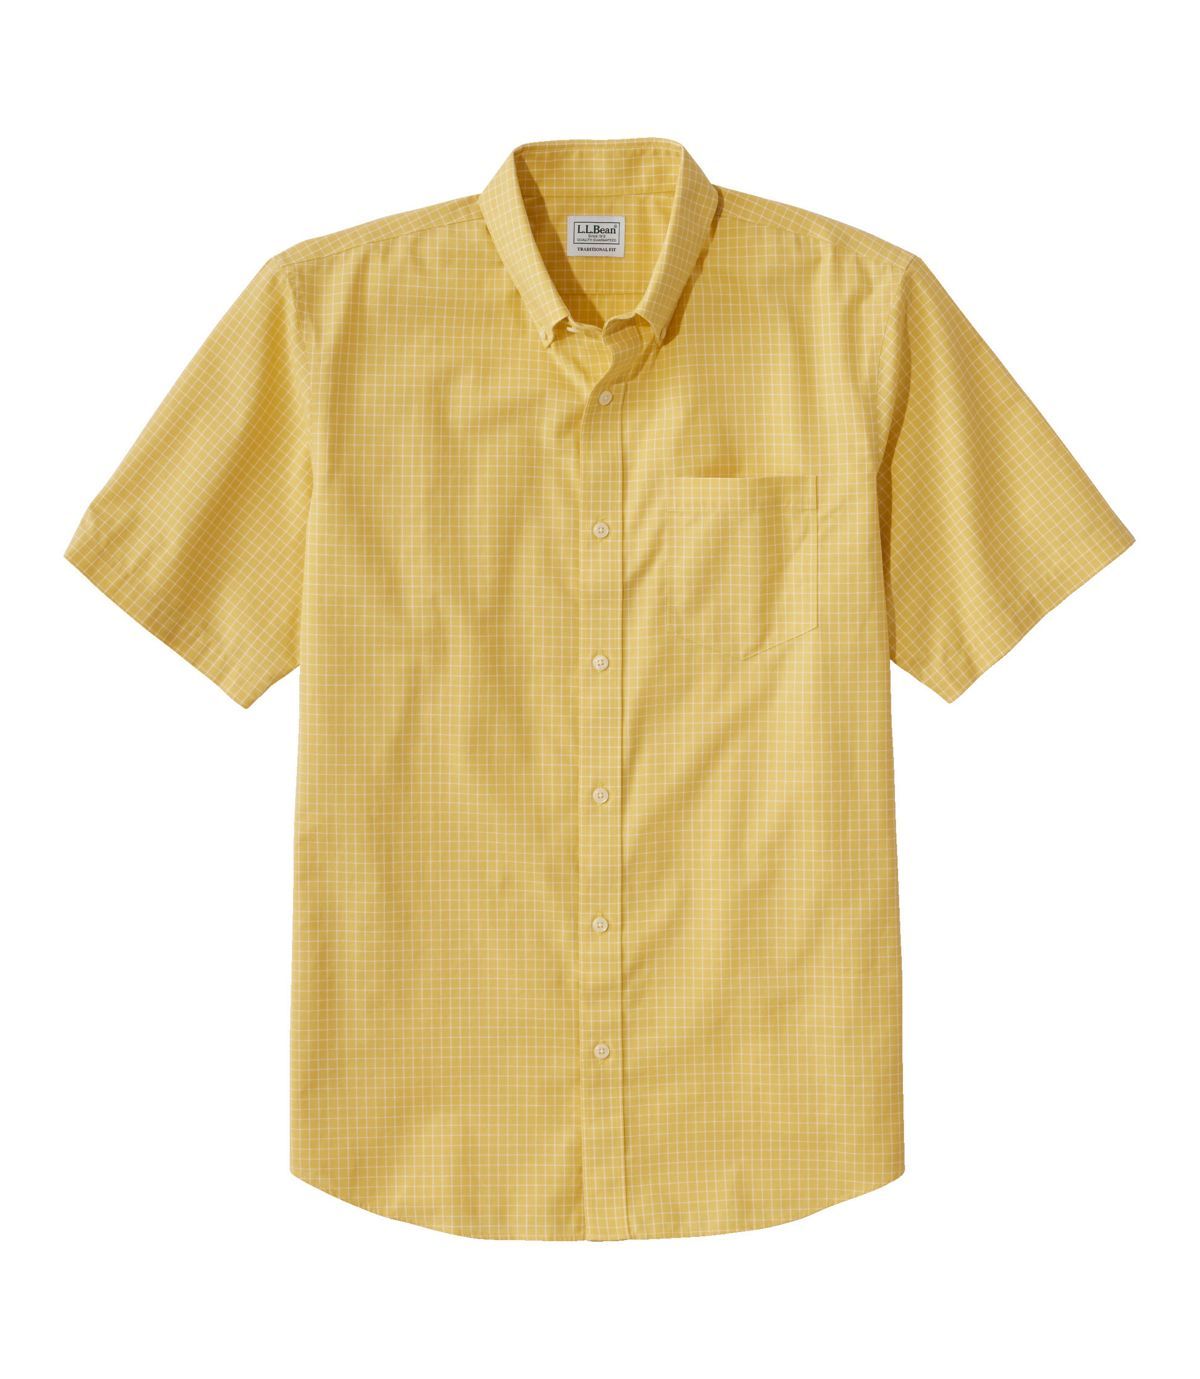 Men's Wrinkle-Free Kennebunk Sport Shirt, Traditional Fit Short-Sleeve Check | Shirts at L.L.Bean | L.L. Bean